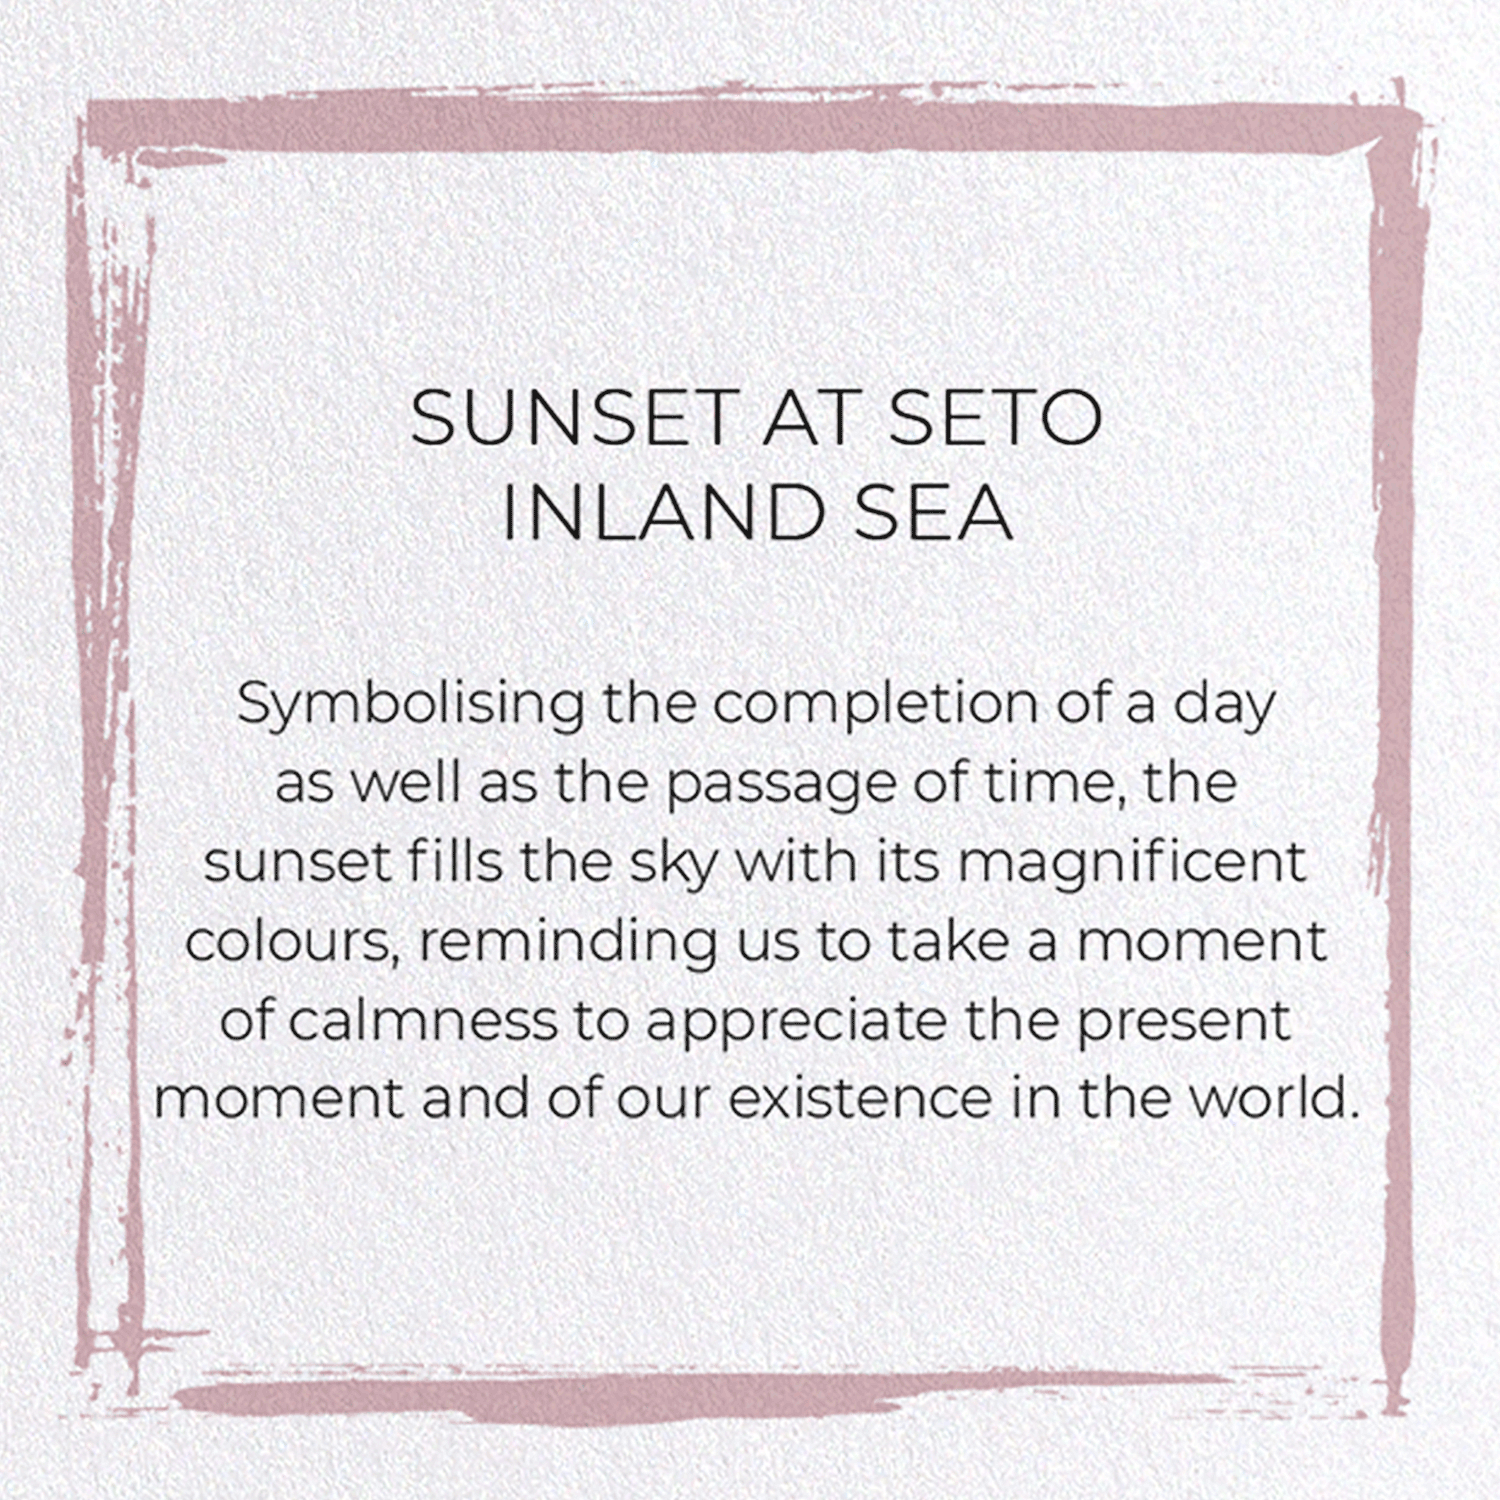 SUNSET AT SETO INLAND SEA